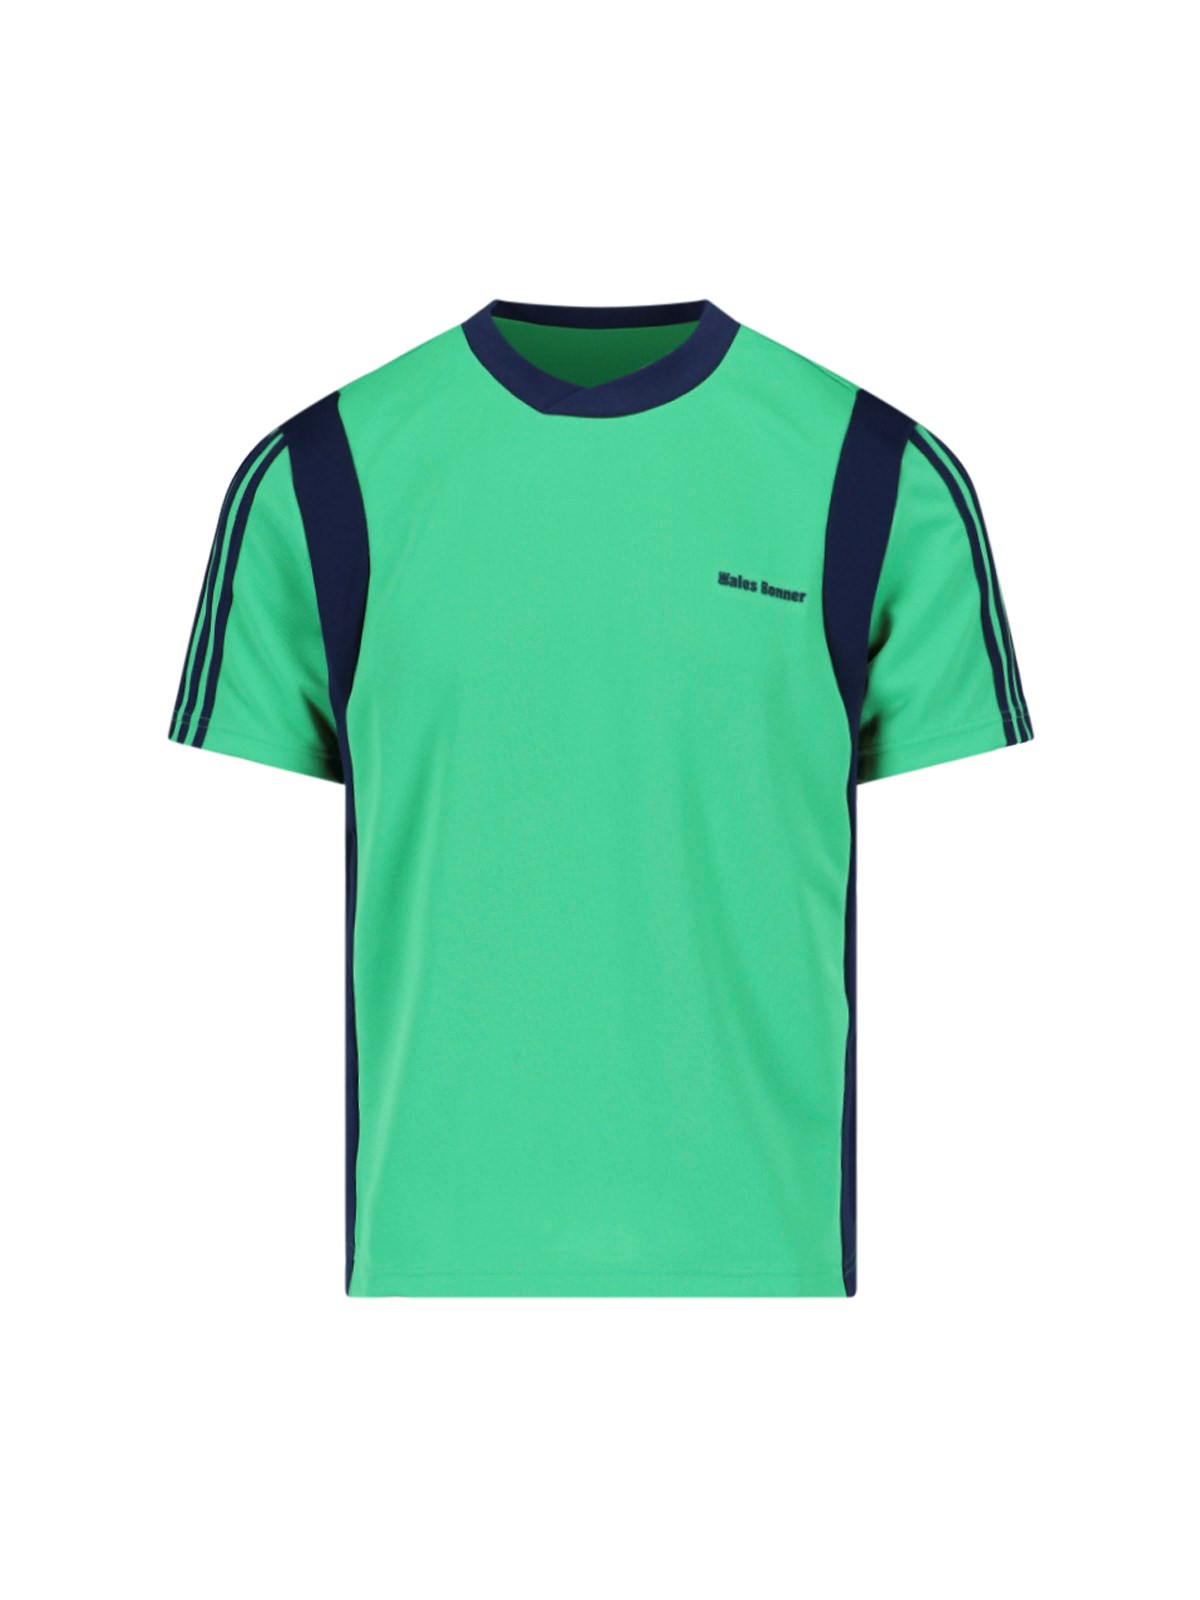 Shop Adidas X Wales Bonner Logo T-shirt In Green